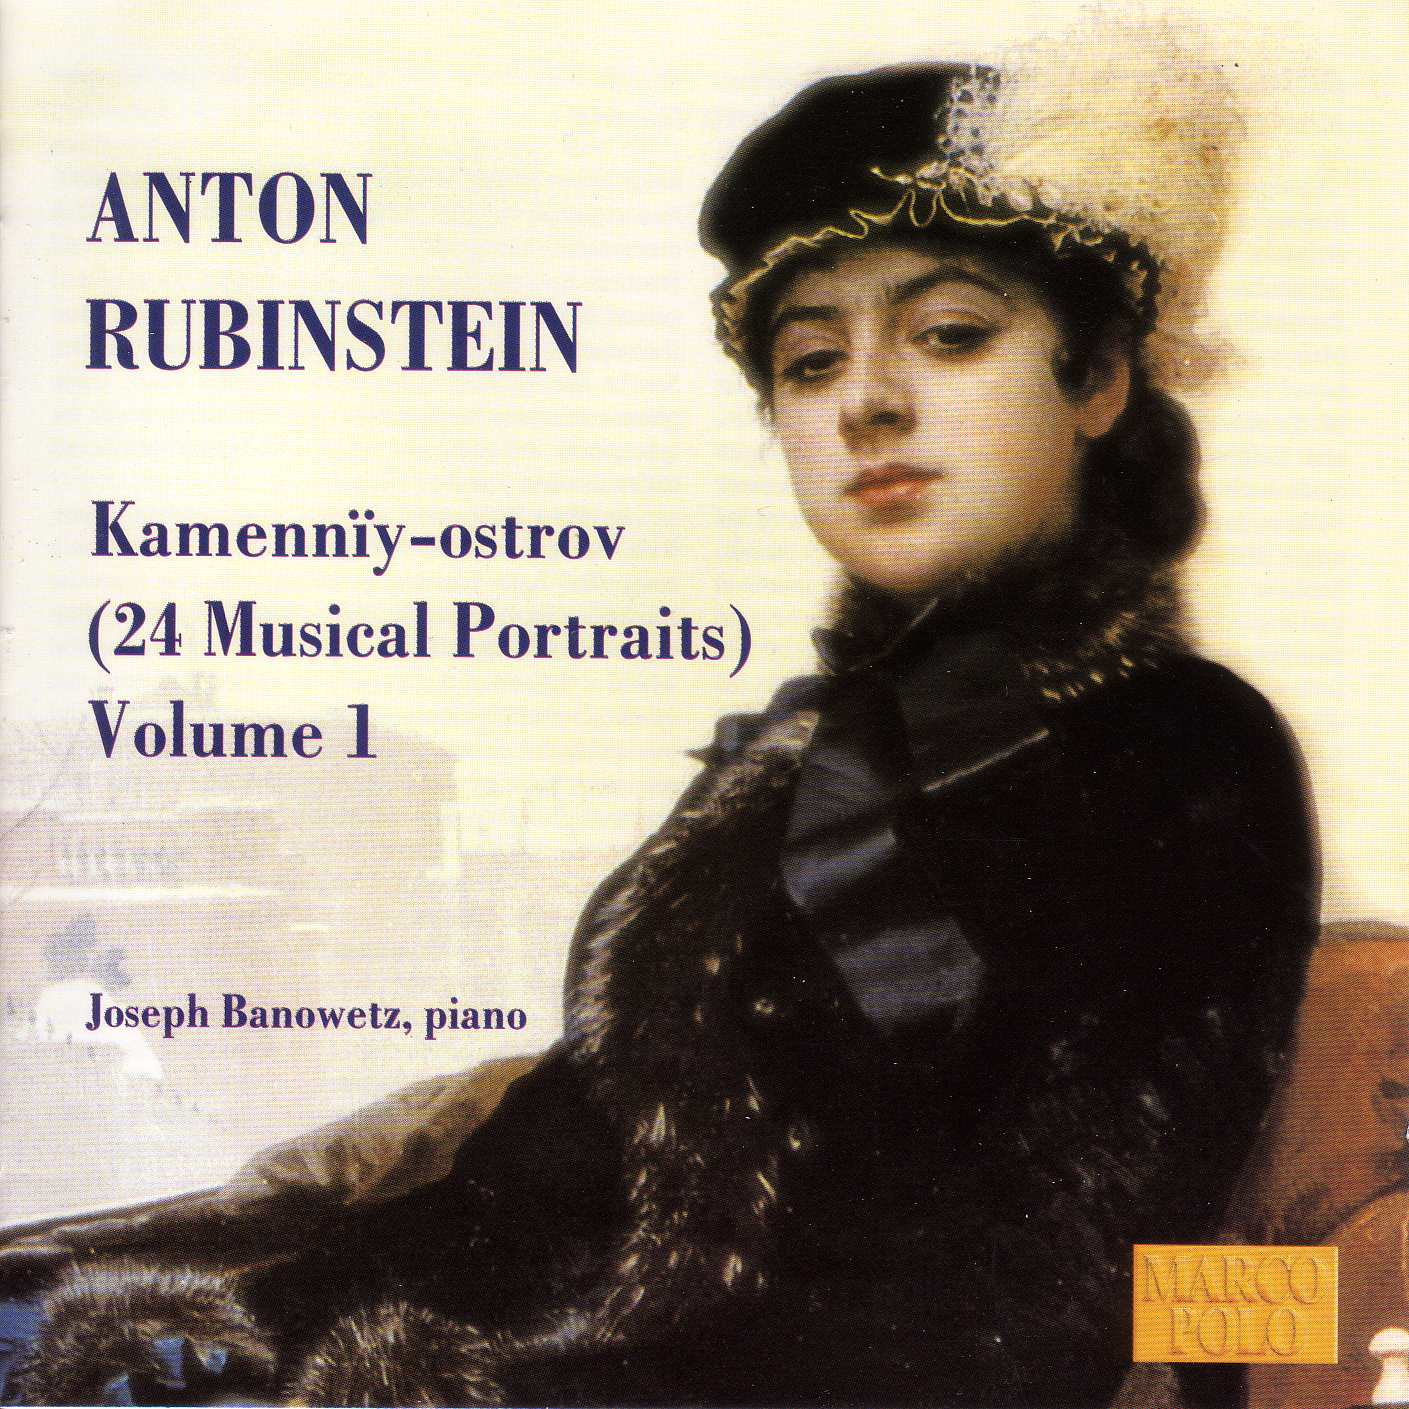 Anton Rubinstein Competition - Wikipedia